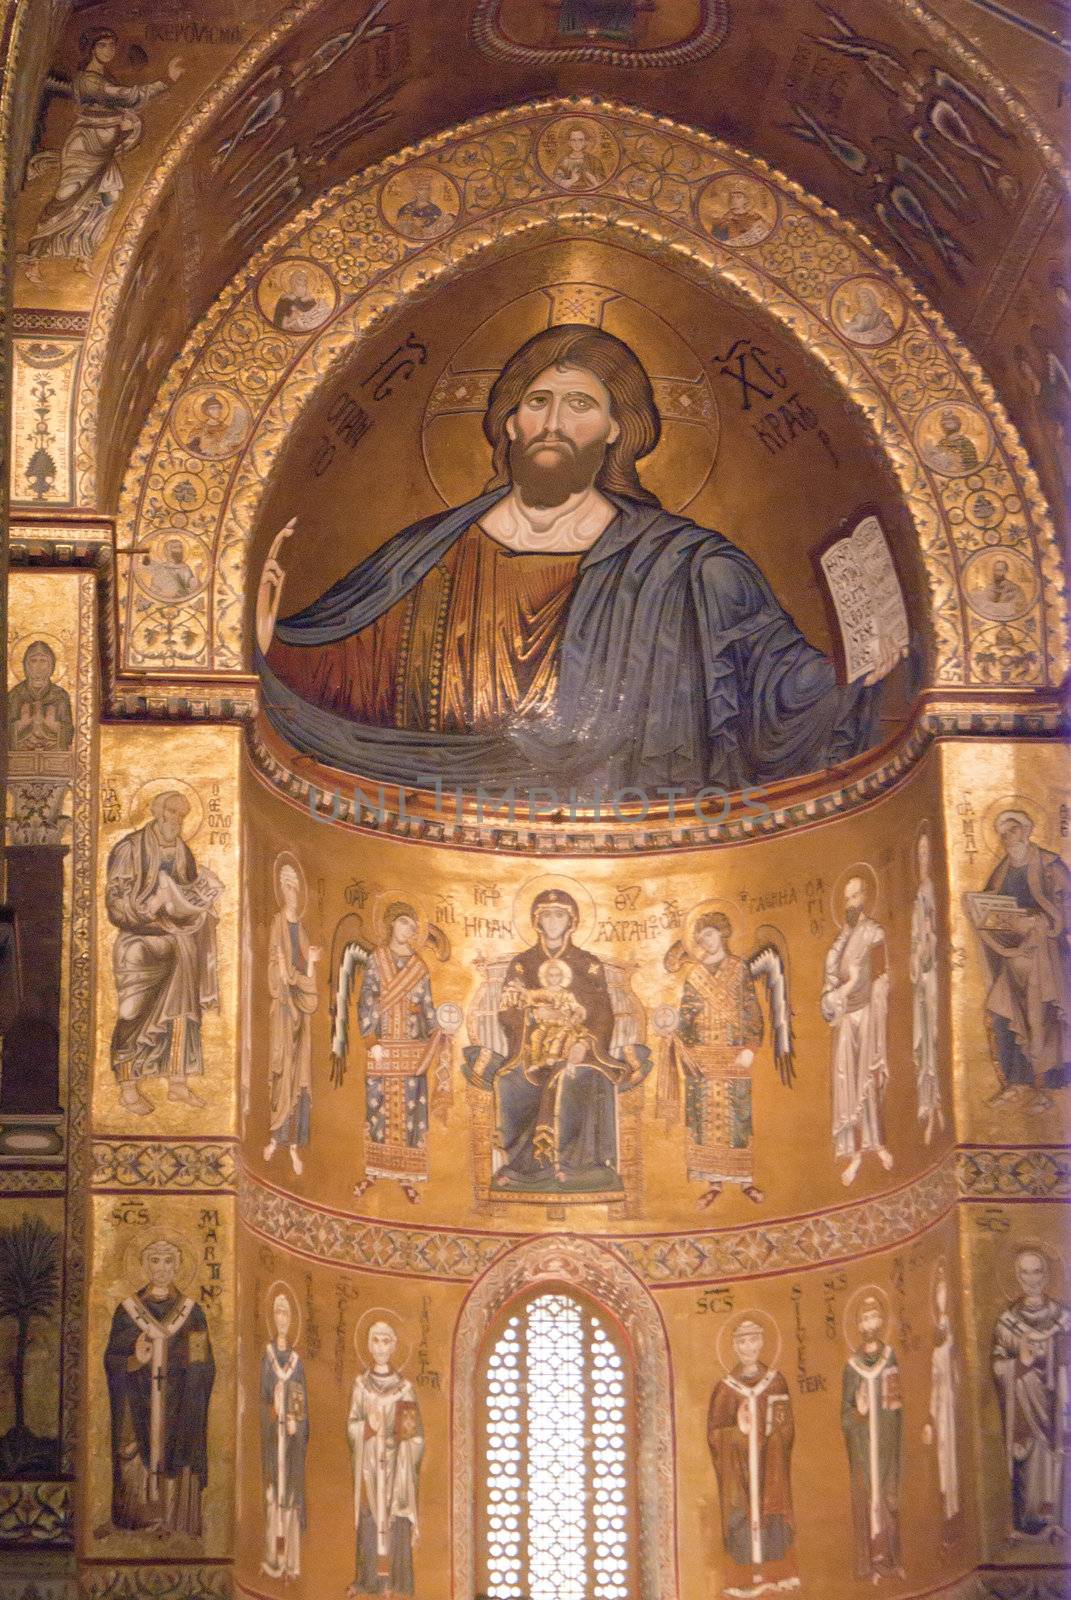 Cathedral of Monreale. Golden Mosaics. Sicily by gandolfocannatella